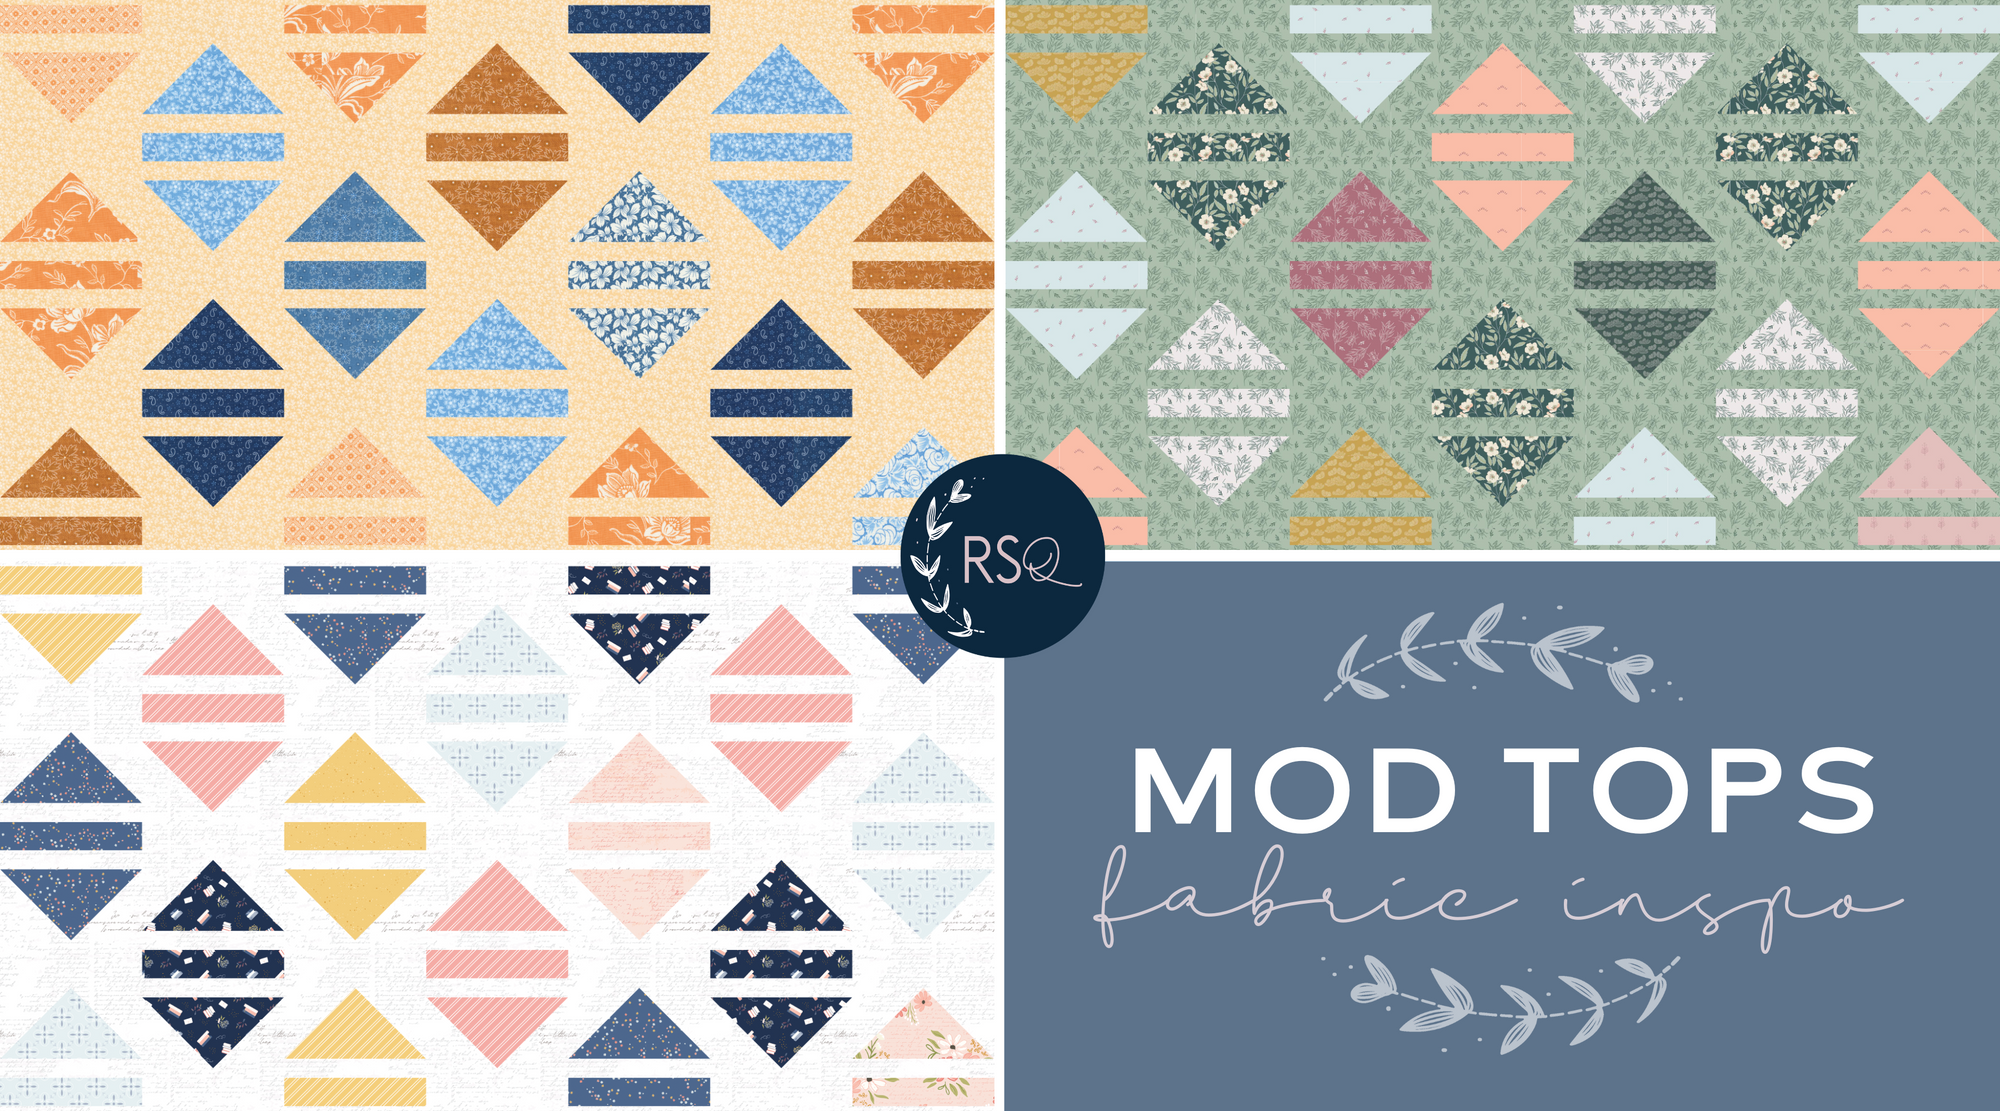 Mod Tops Quilt - Fabric Inspiration